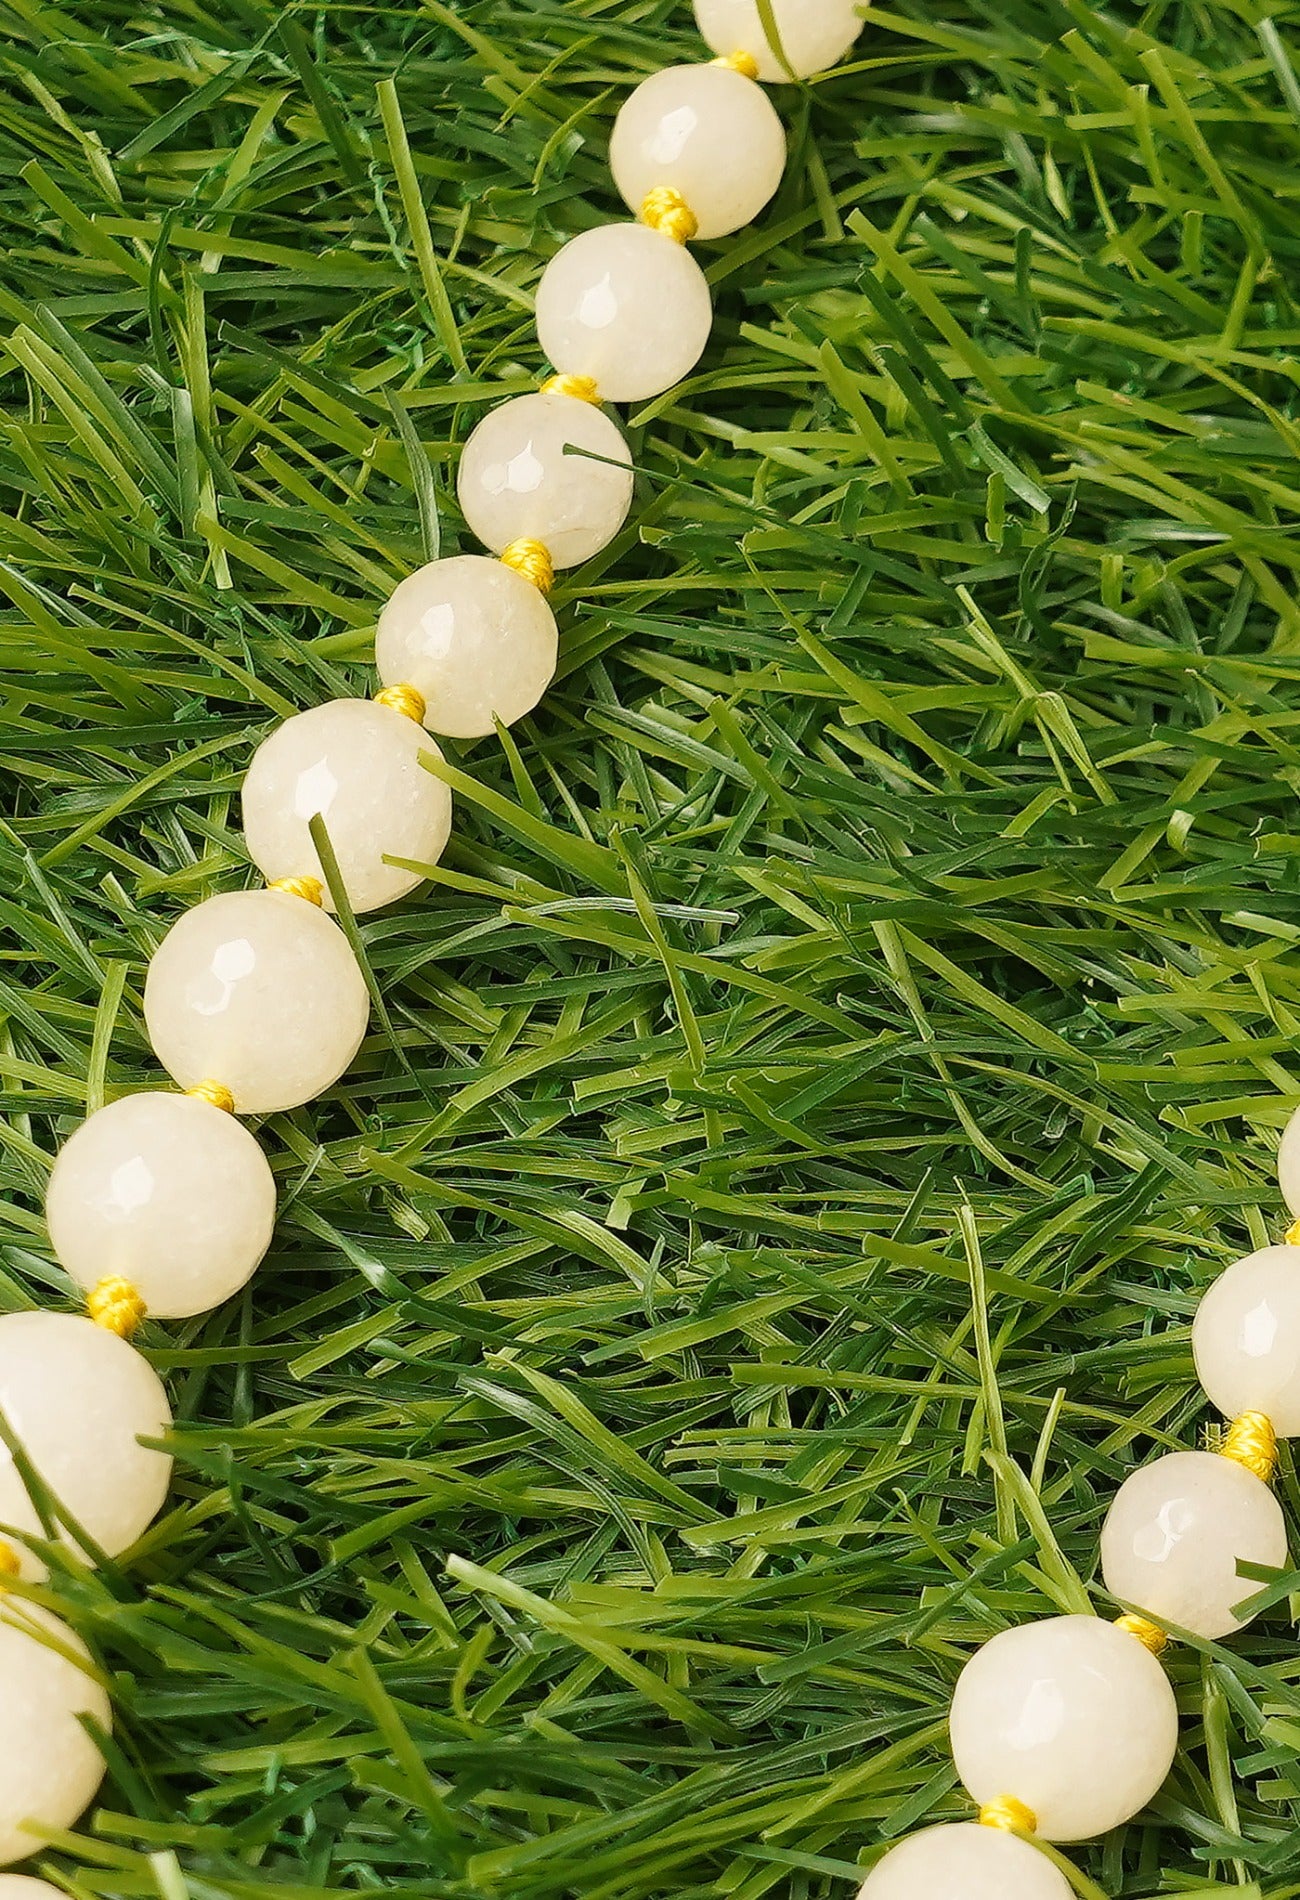 Yellow Amravati Ocean Beads Necklace-UJ117